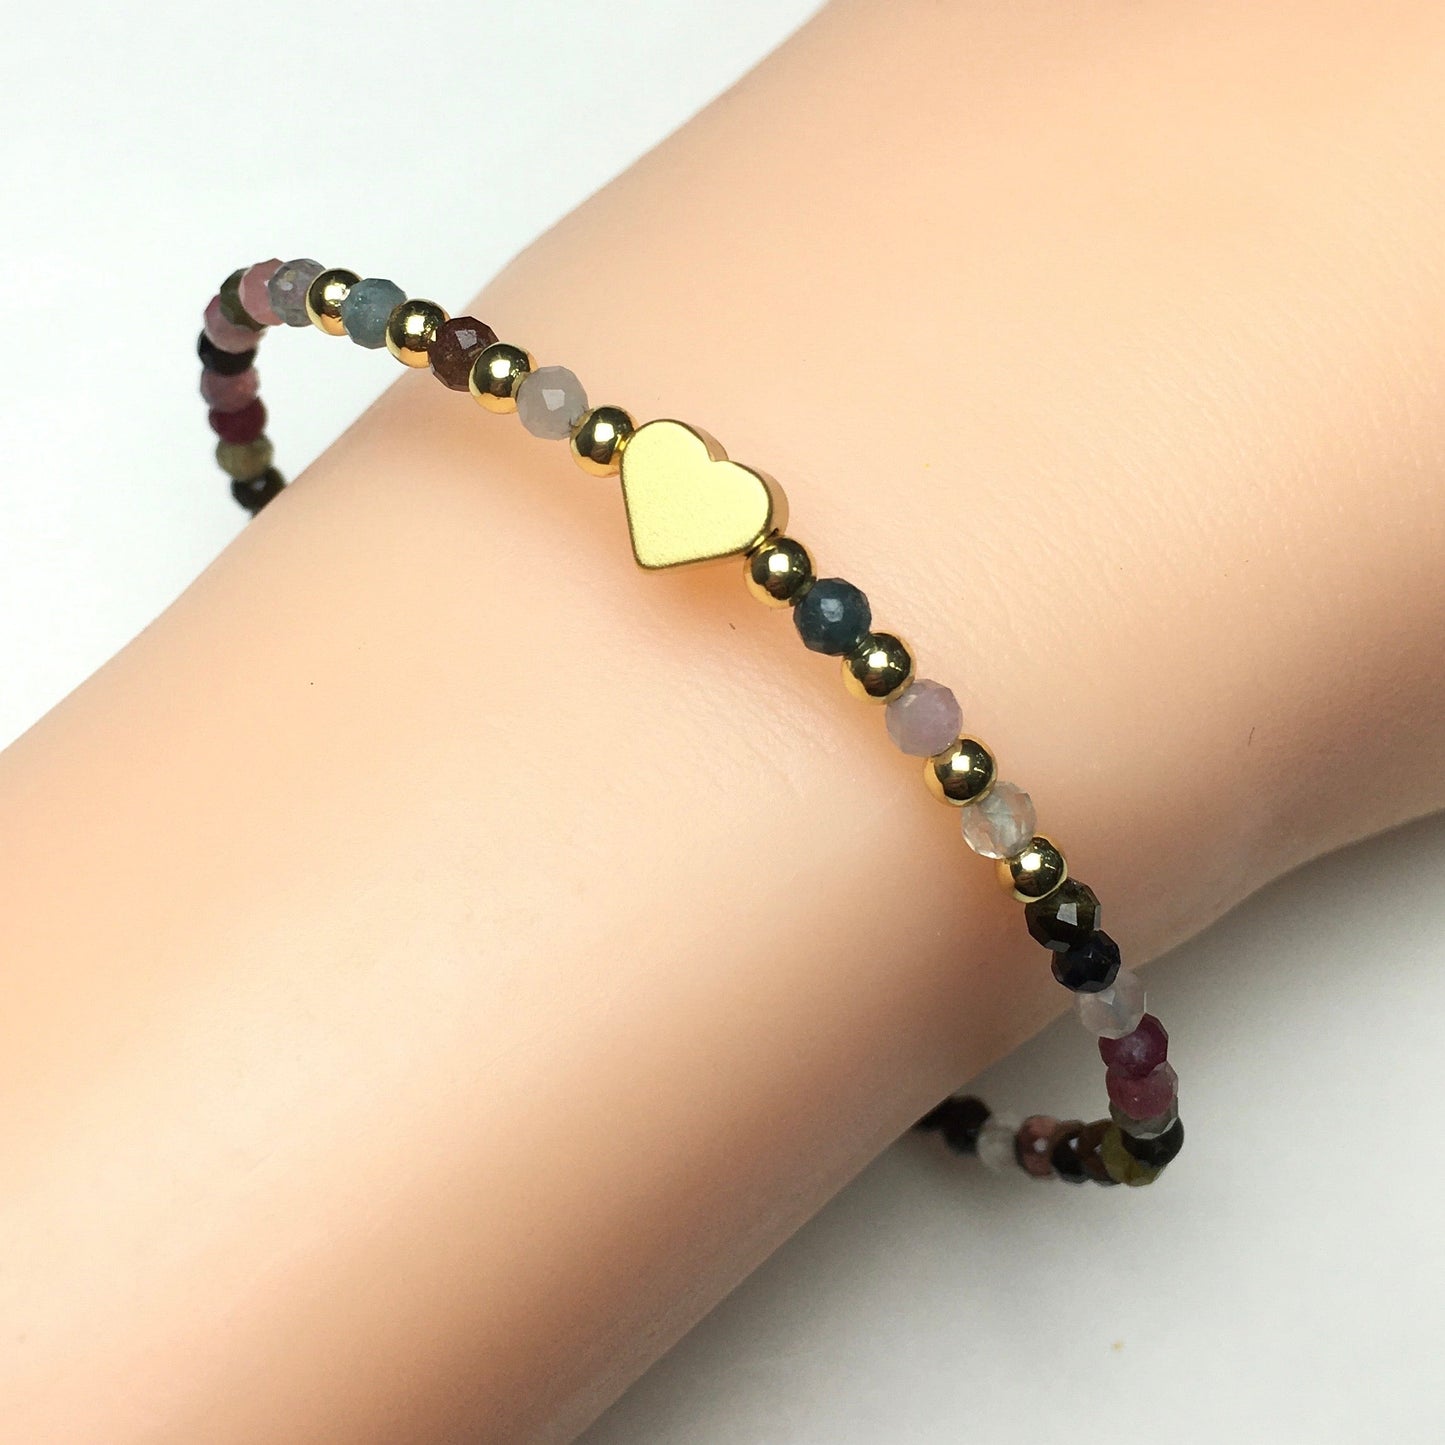 Tourmaline Gemstone Adjustable tiny Beads Gemstone Bracelet with Love Heart Charm